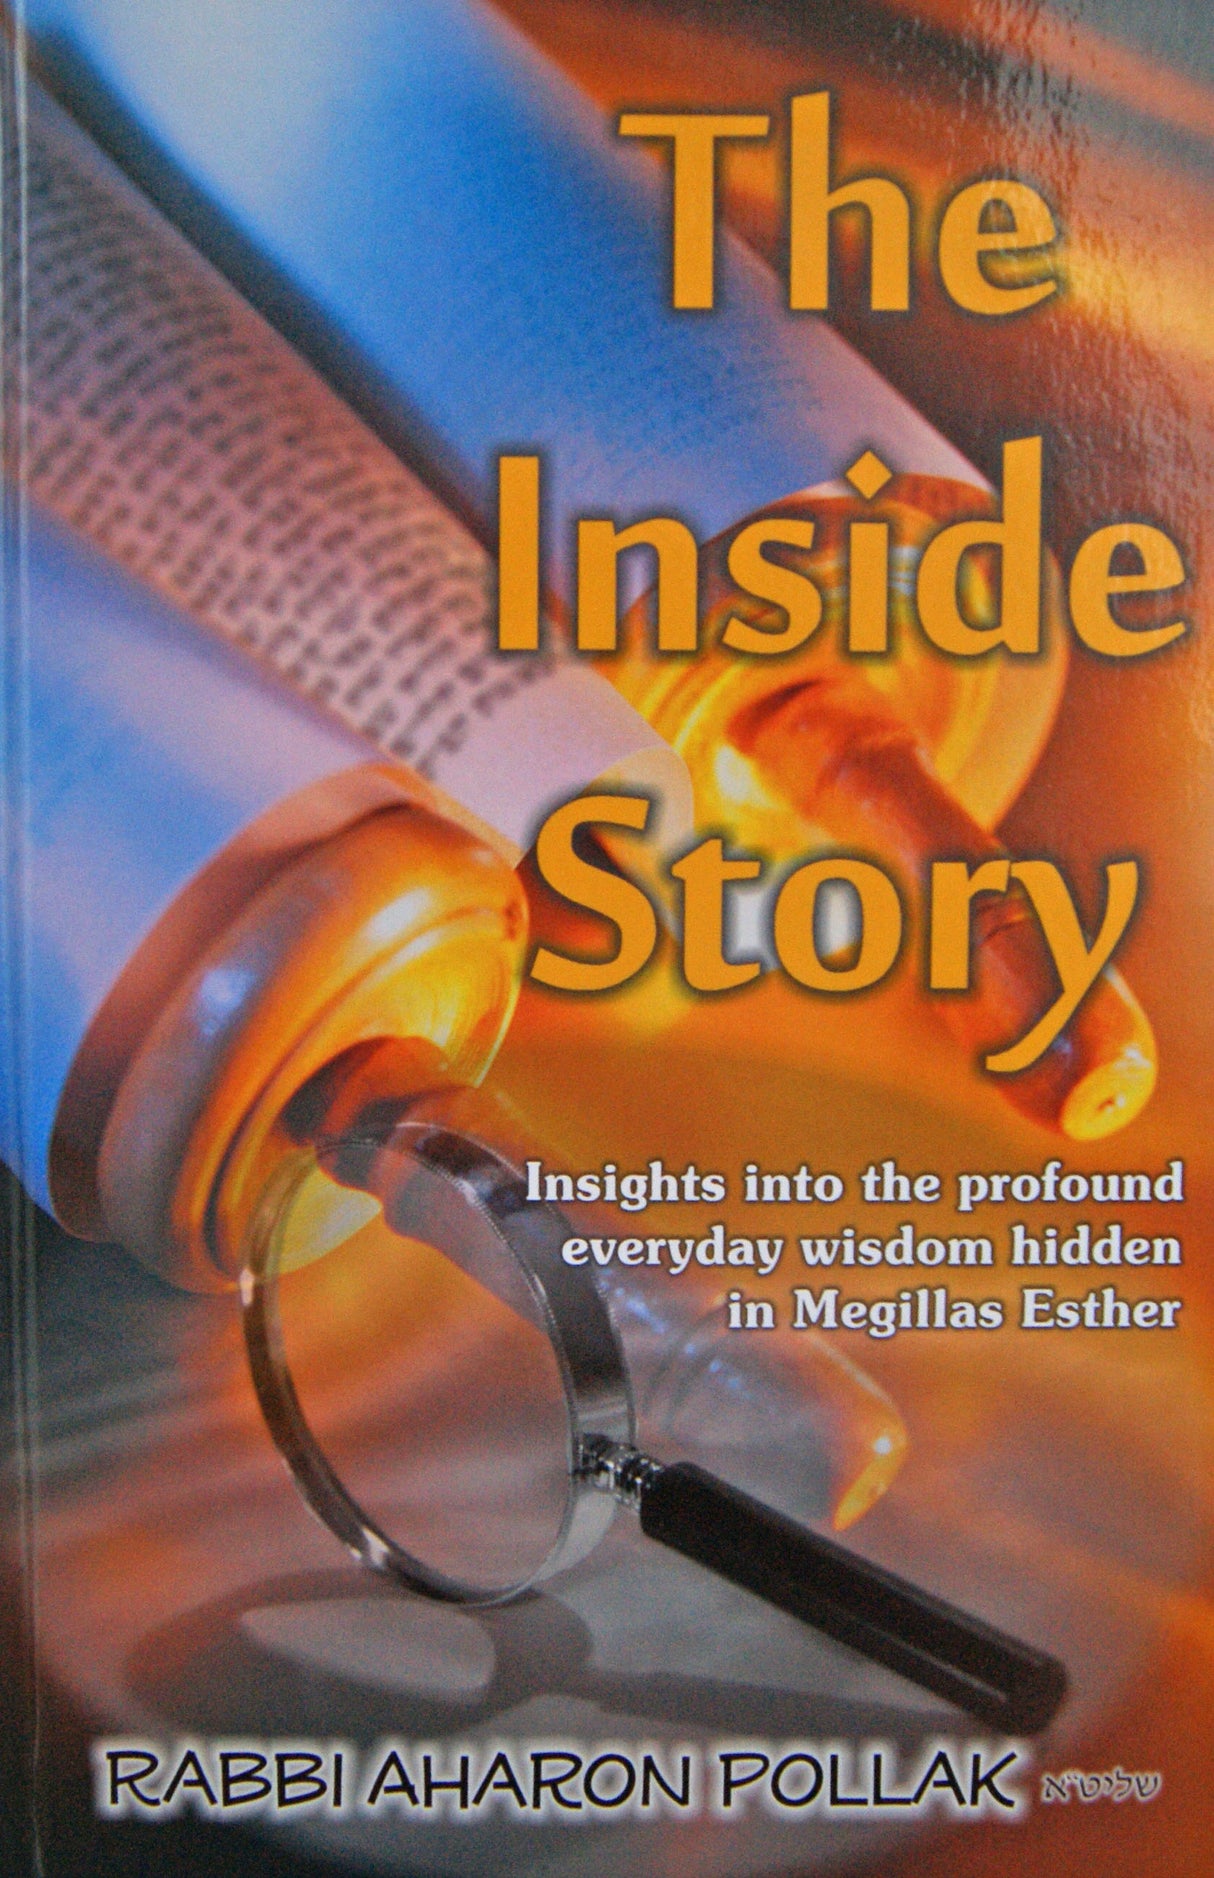 The Inside Story - everyday wisdom hidden in Megillas Esther